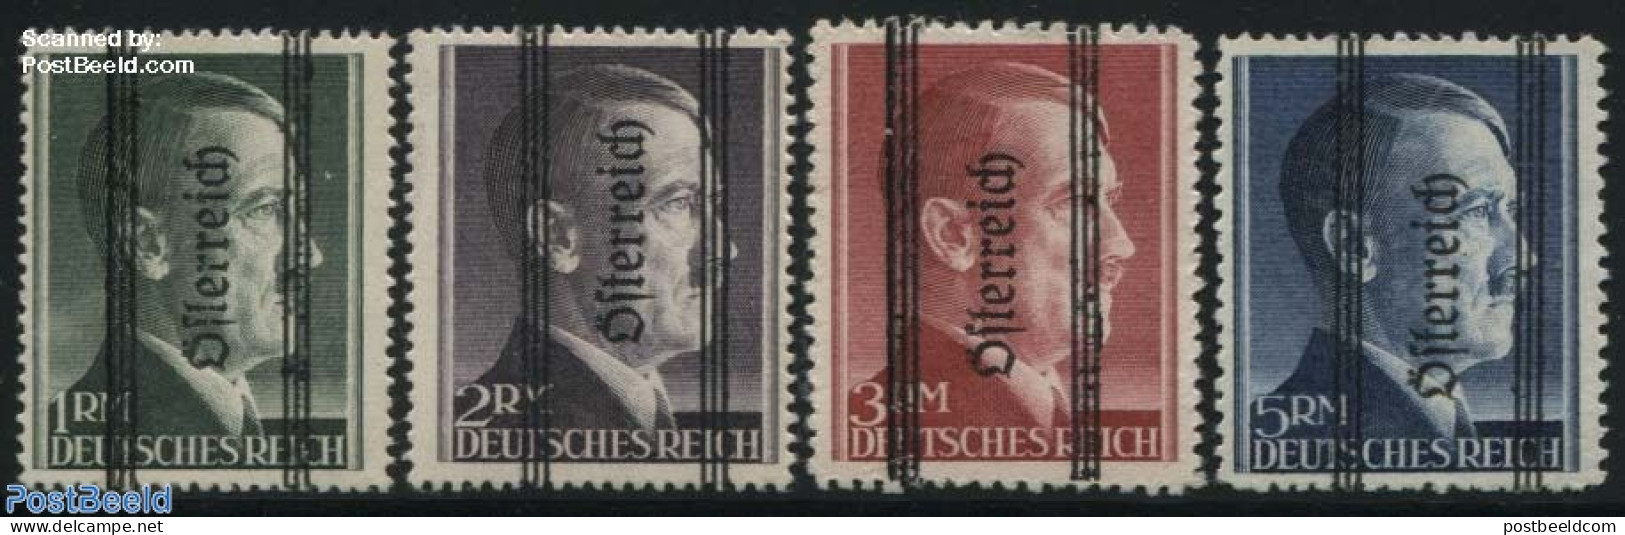 Austria 1945 Overprints 4v, Type II, Mint NH - Neufs